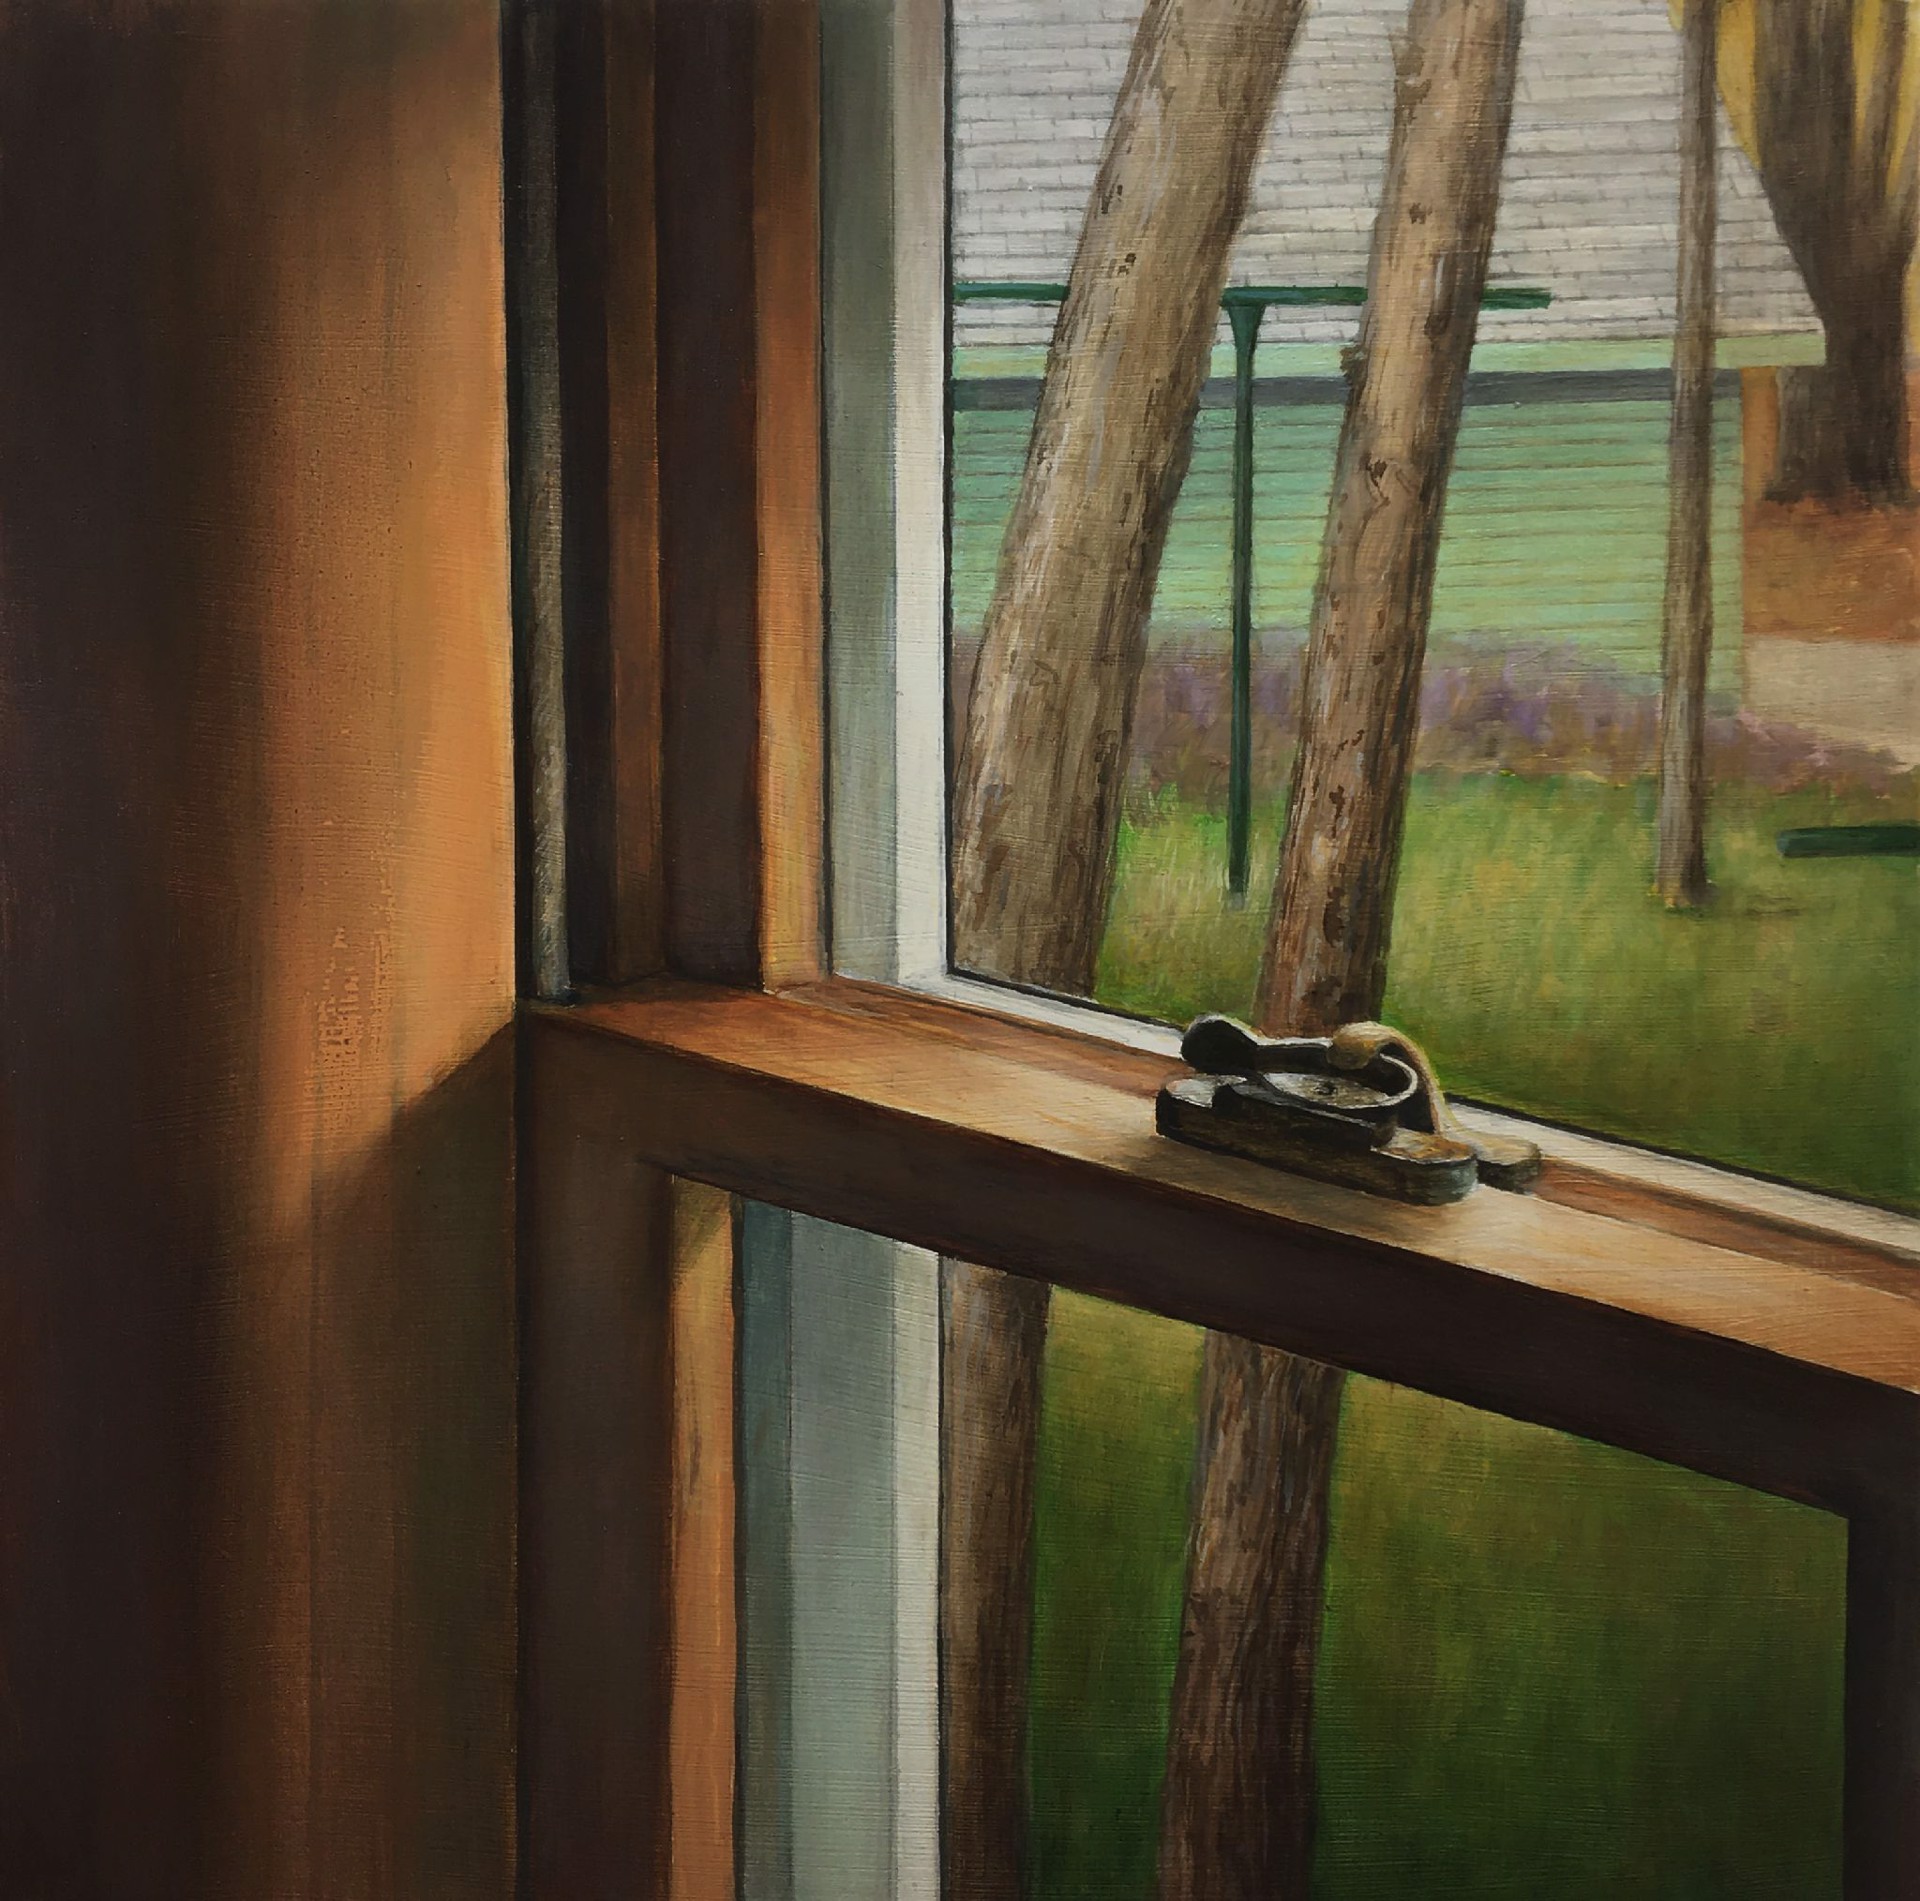 Backyard Window by Michael Banning